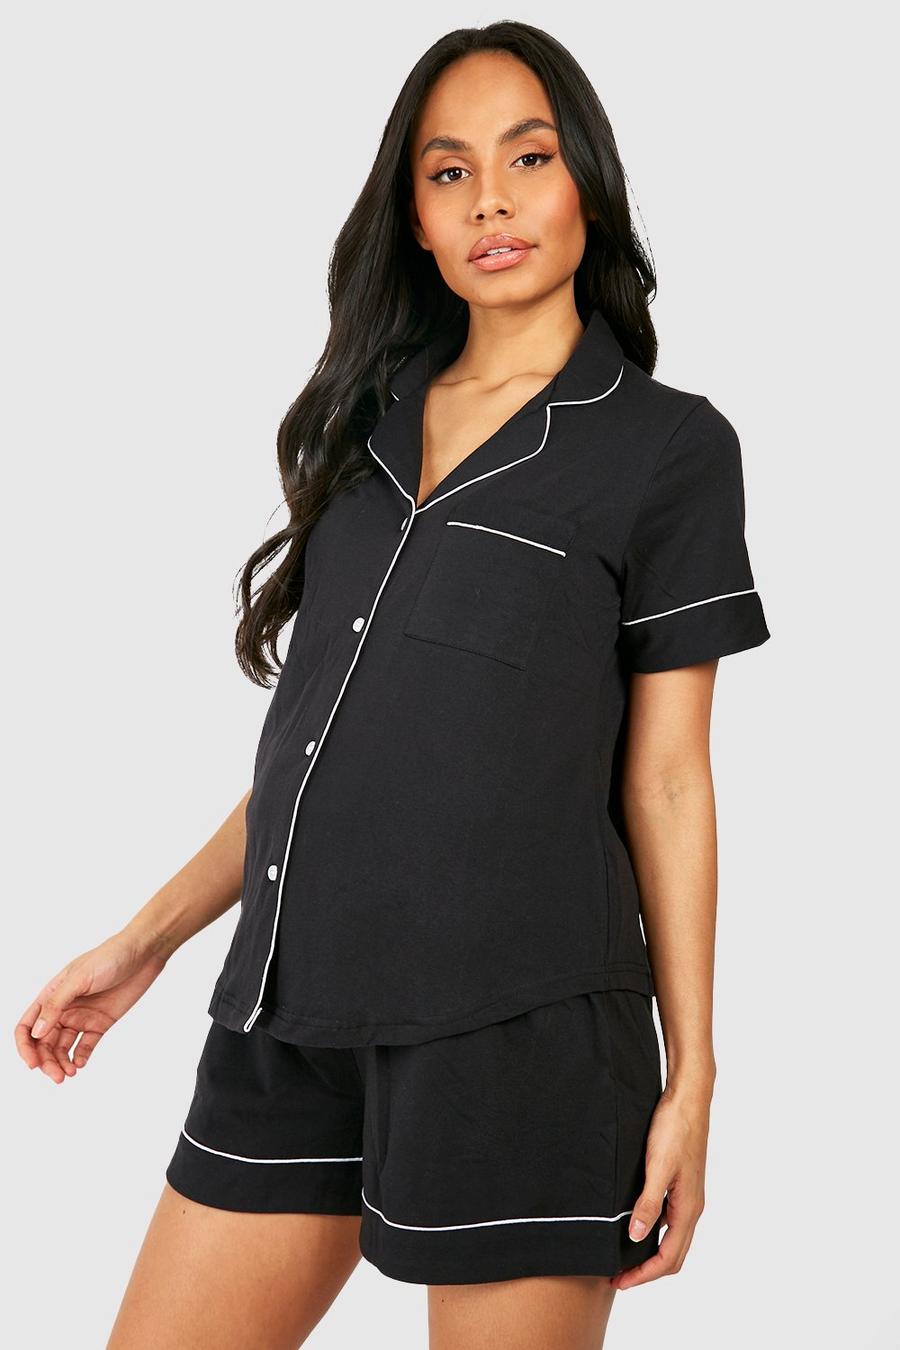 Nursing nightdress by DIS (black), Maternity nightwear